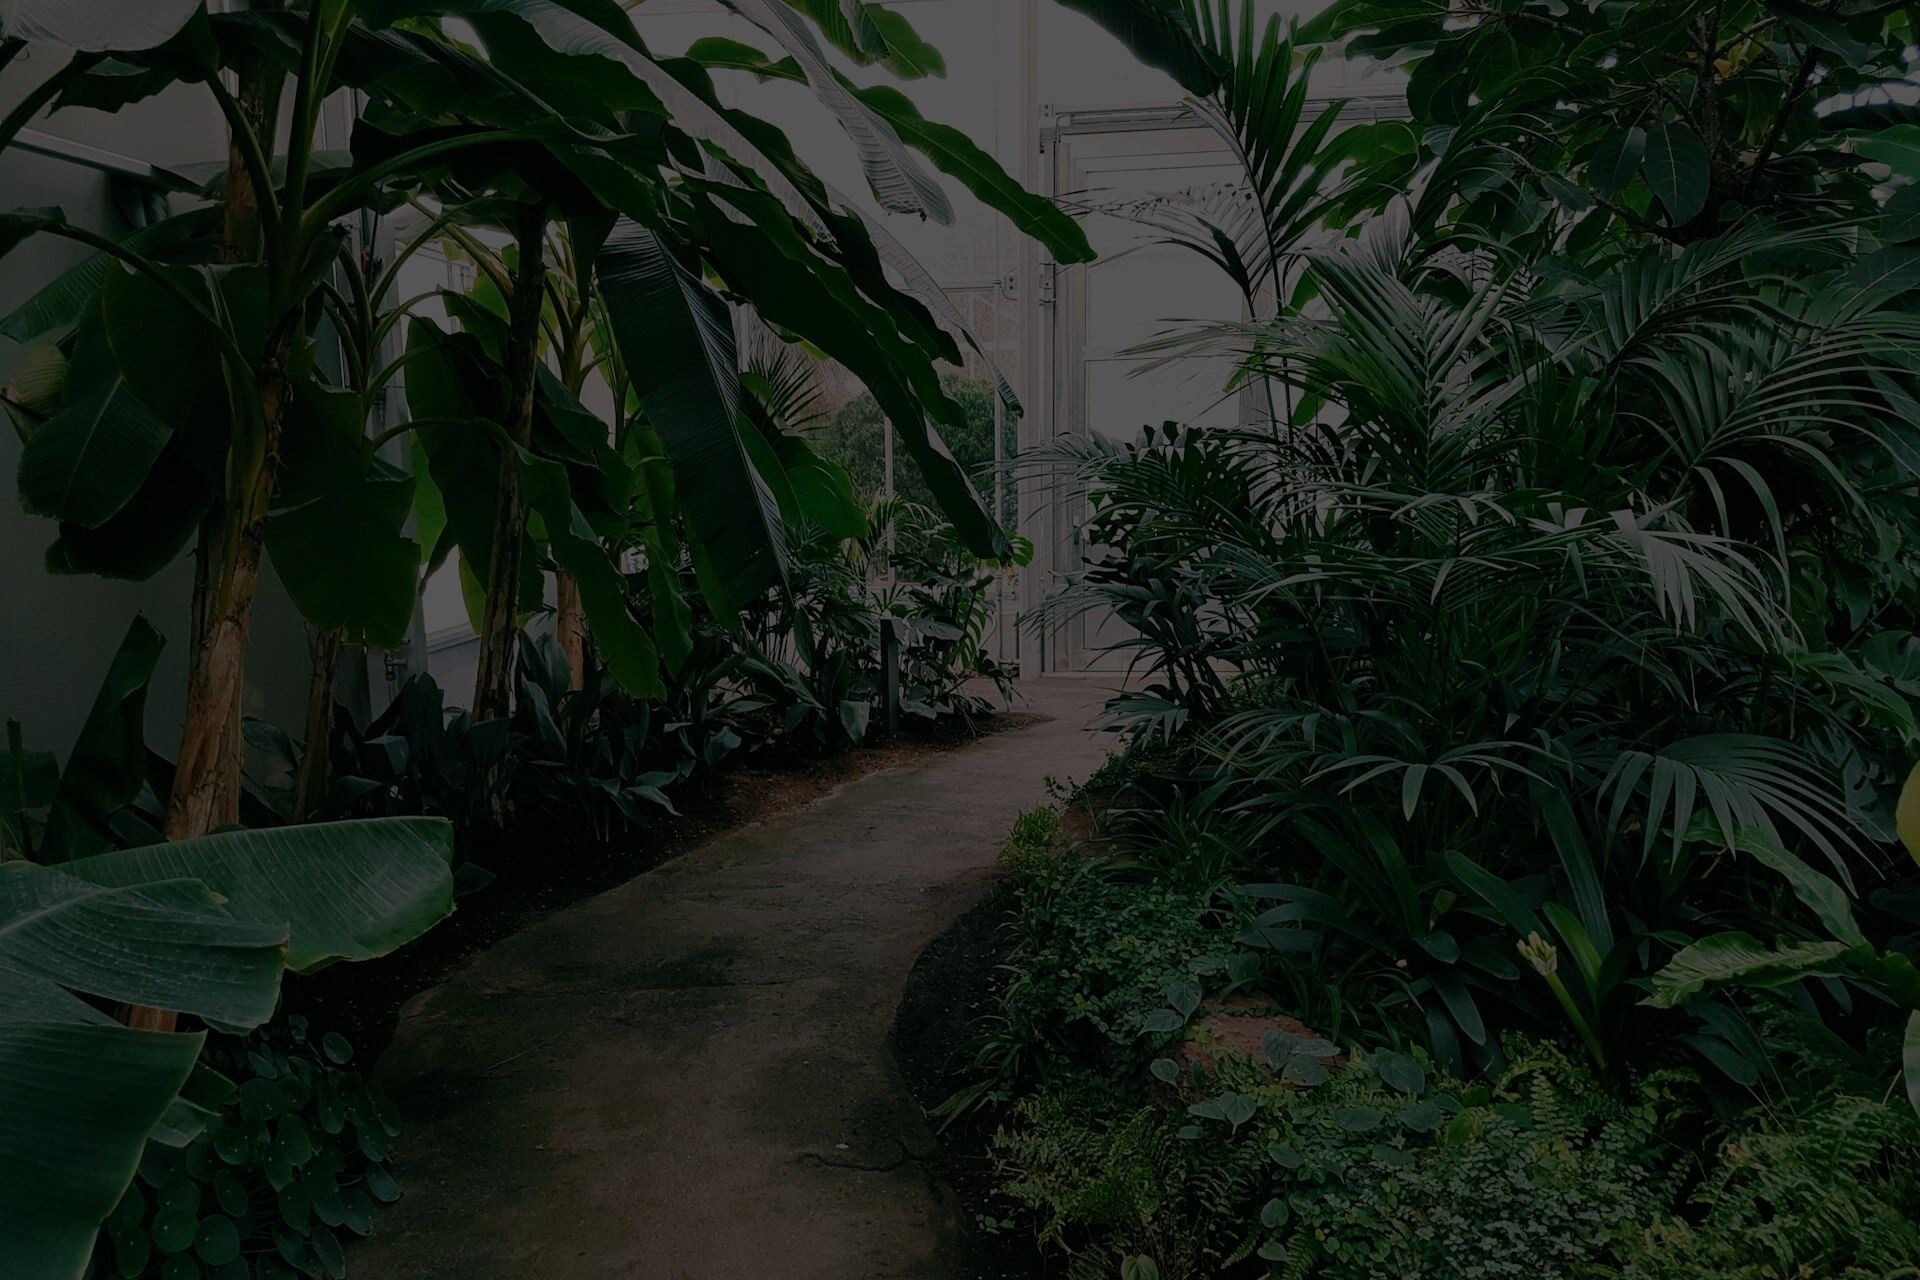 Visiting Specialty Plant Nurseries